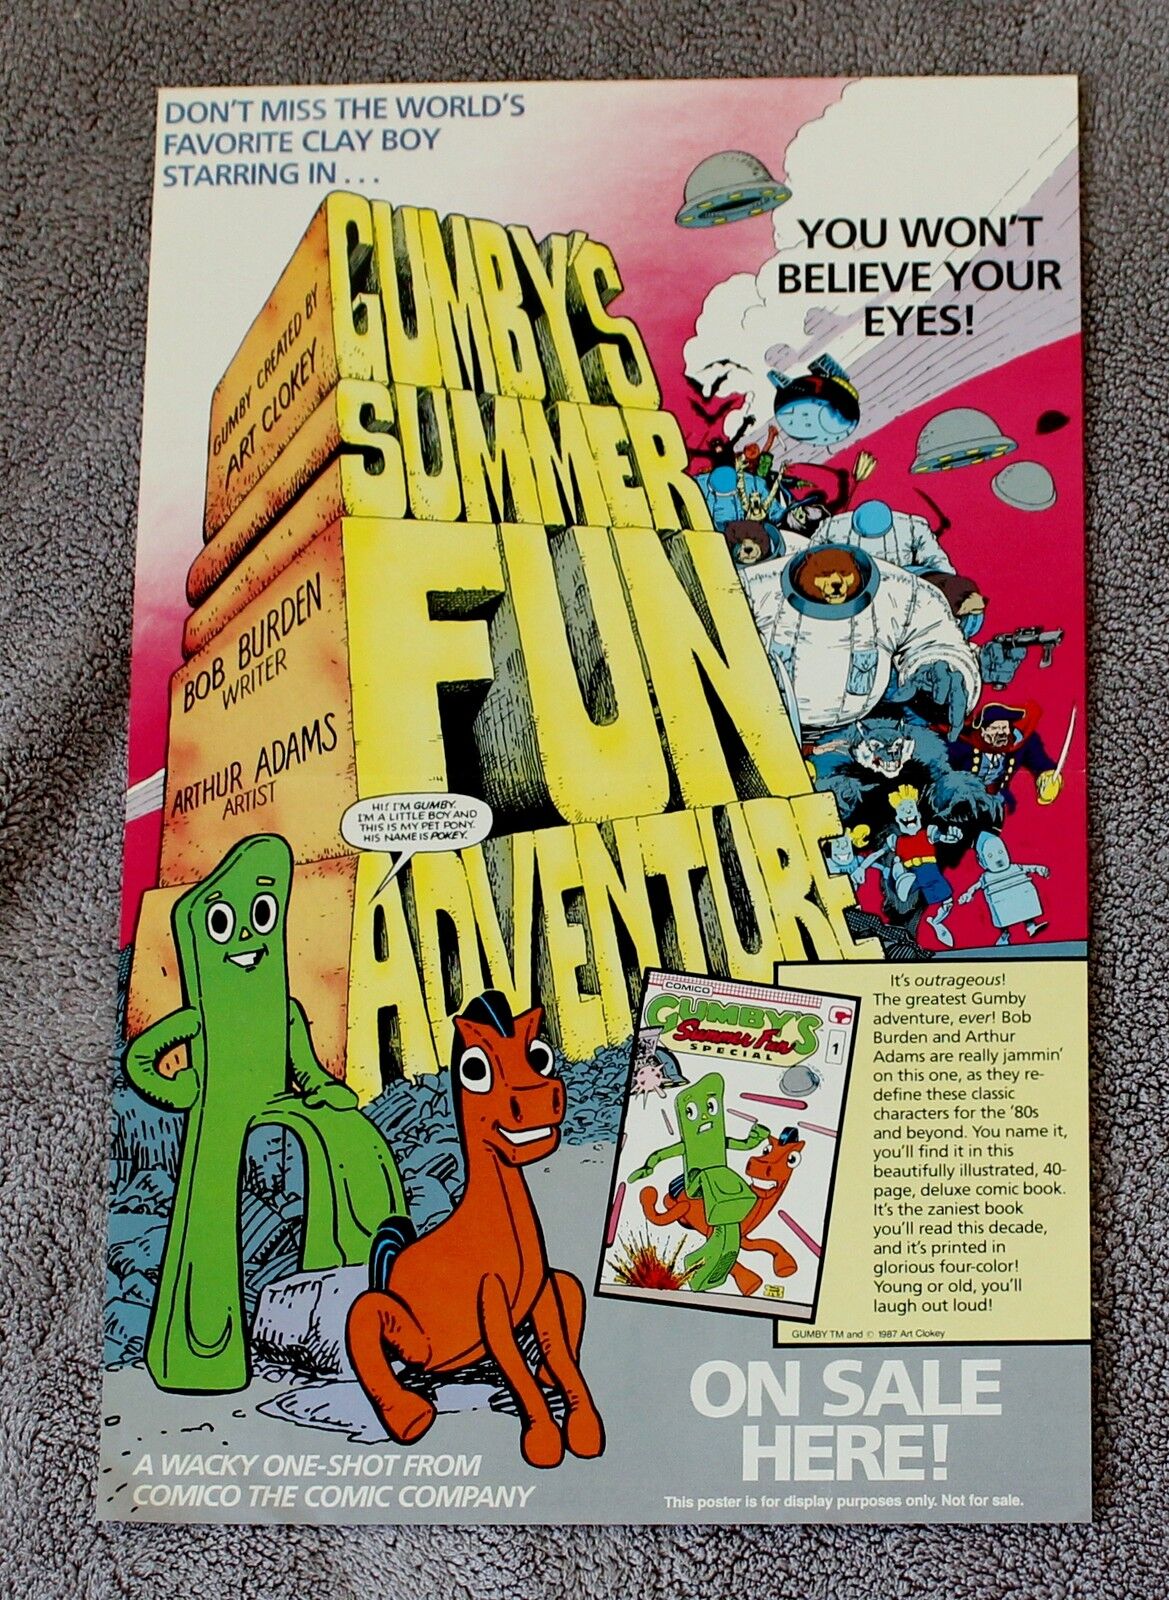 Gumby Summer Fun Adventure 1987 Art Clokey Burden Adams Comic PROMO Poster VF